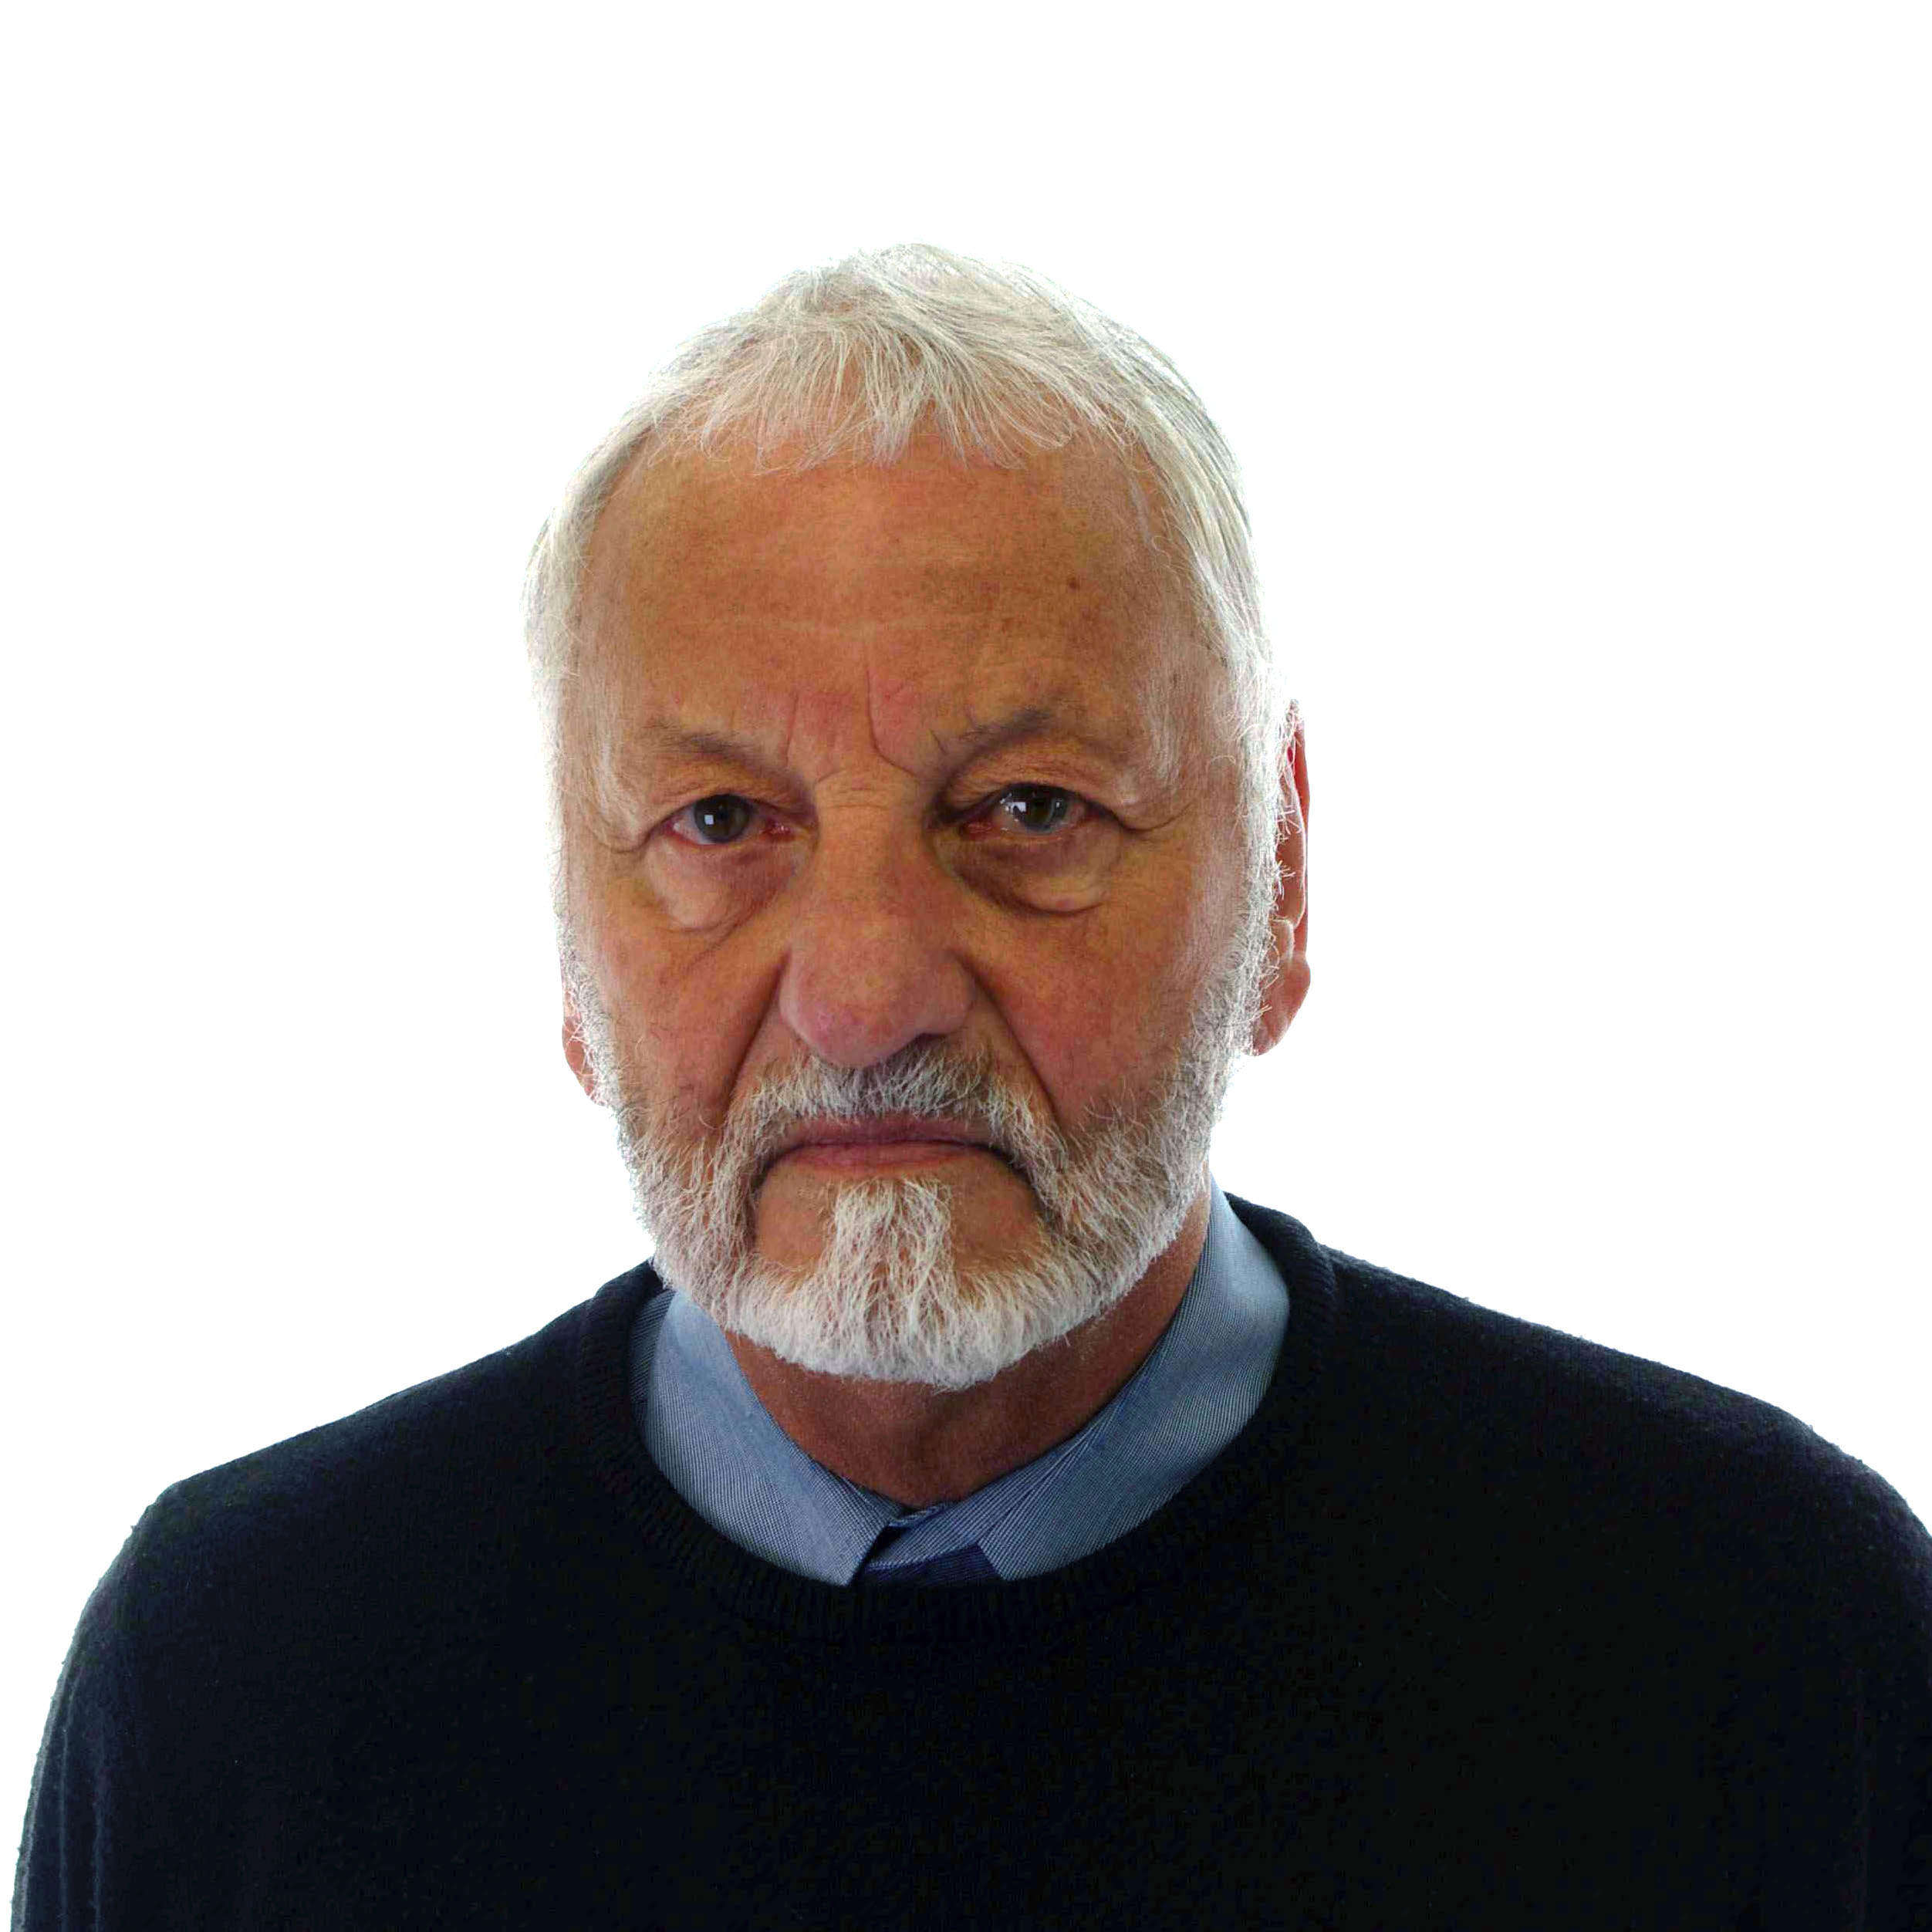 Profile image of Mike Pinnock, Author